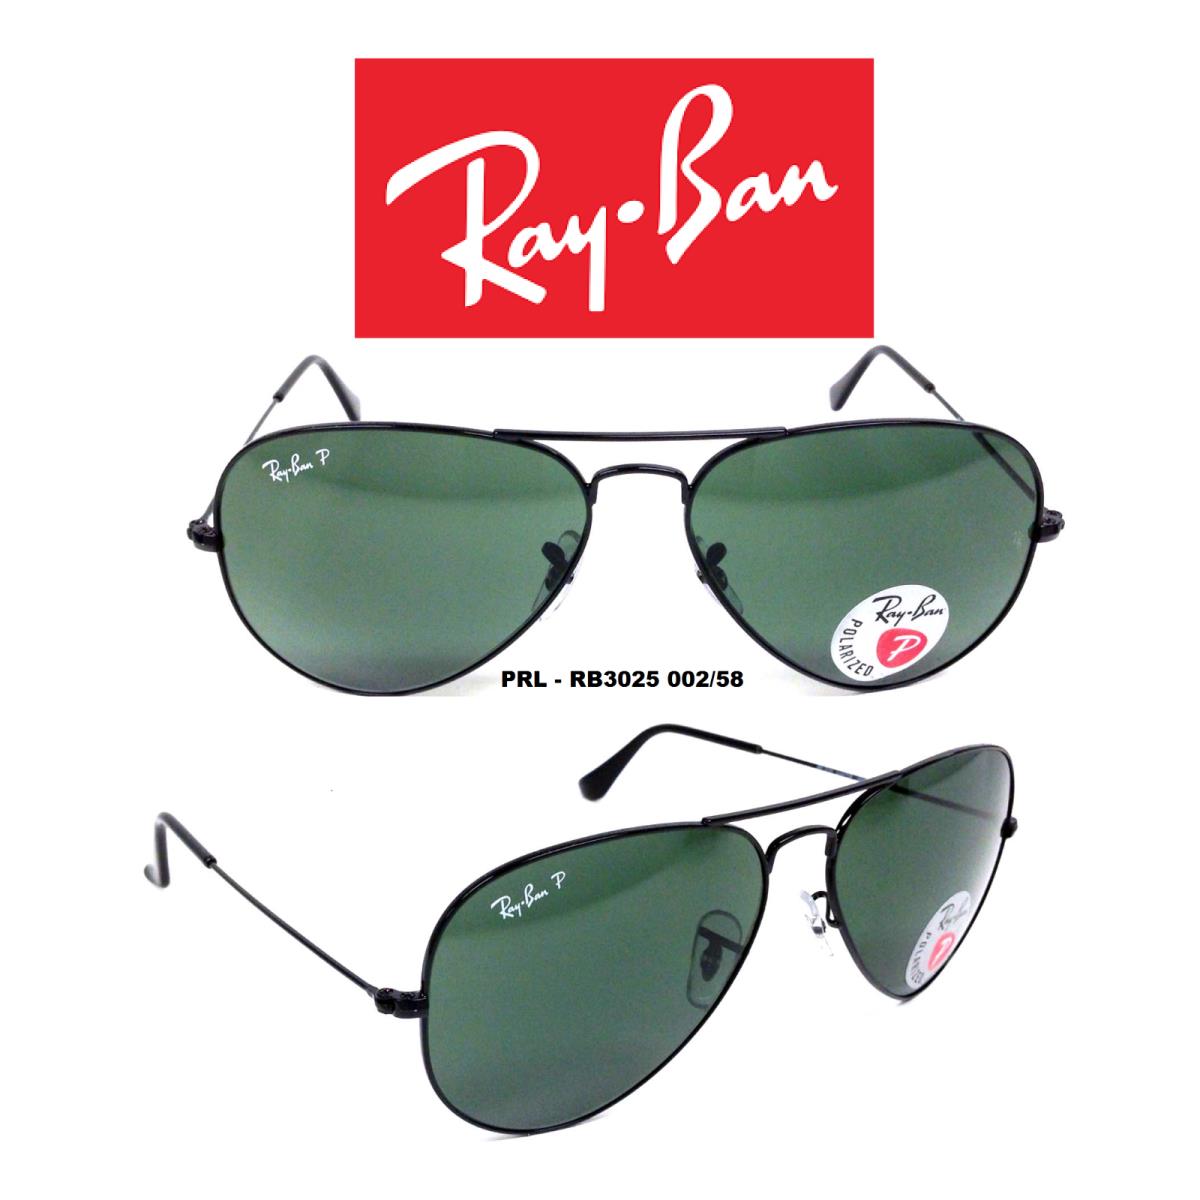 Ray-ban Sunglasses RB3025 002/58 Aviator Classic Series Multi-color Polarized - Multi-Color Frame, Multi-Color Lens